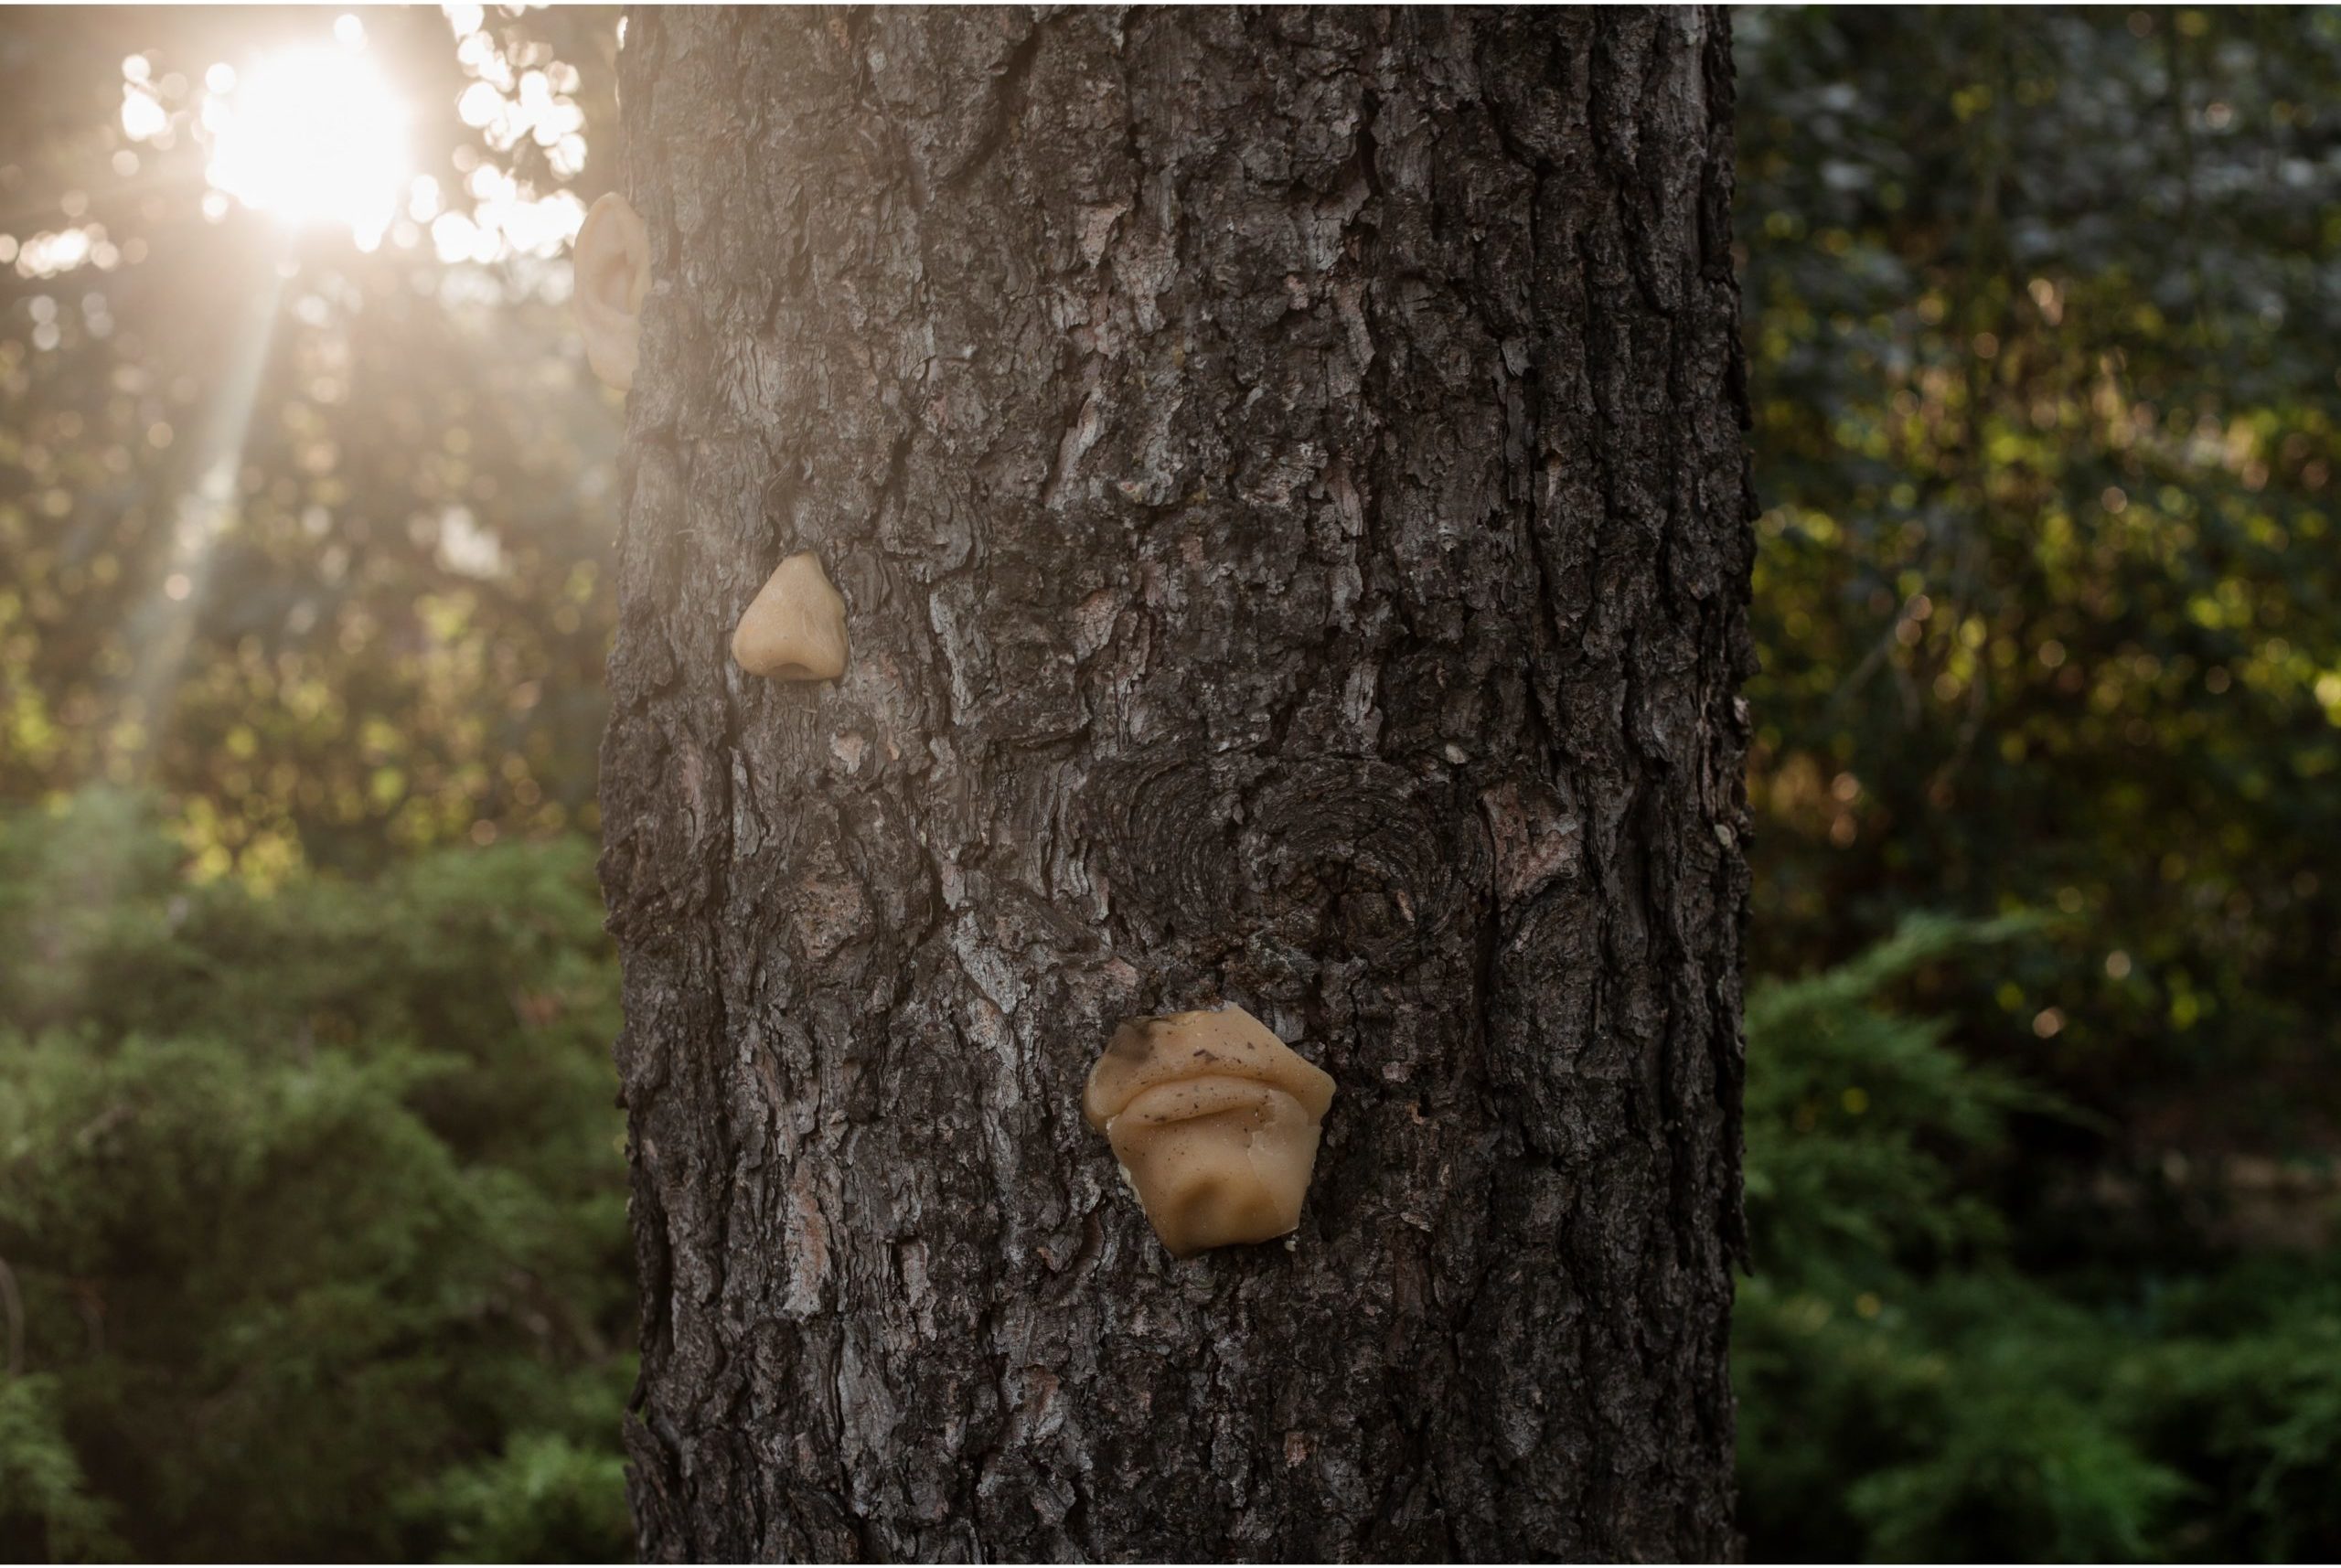 Karolina Majewska - Holy Tree: Baum mit Körperteilen aus Wachs